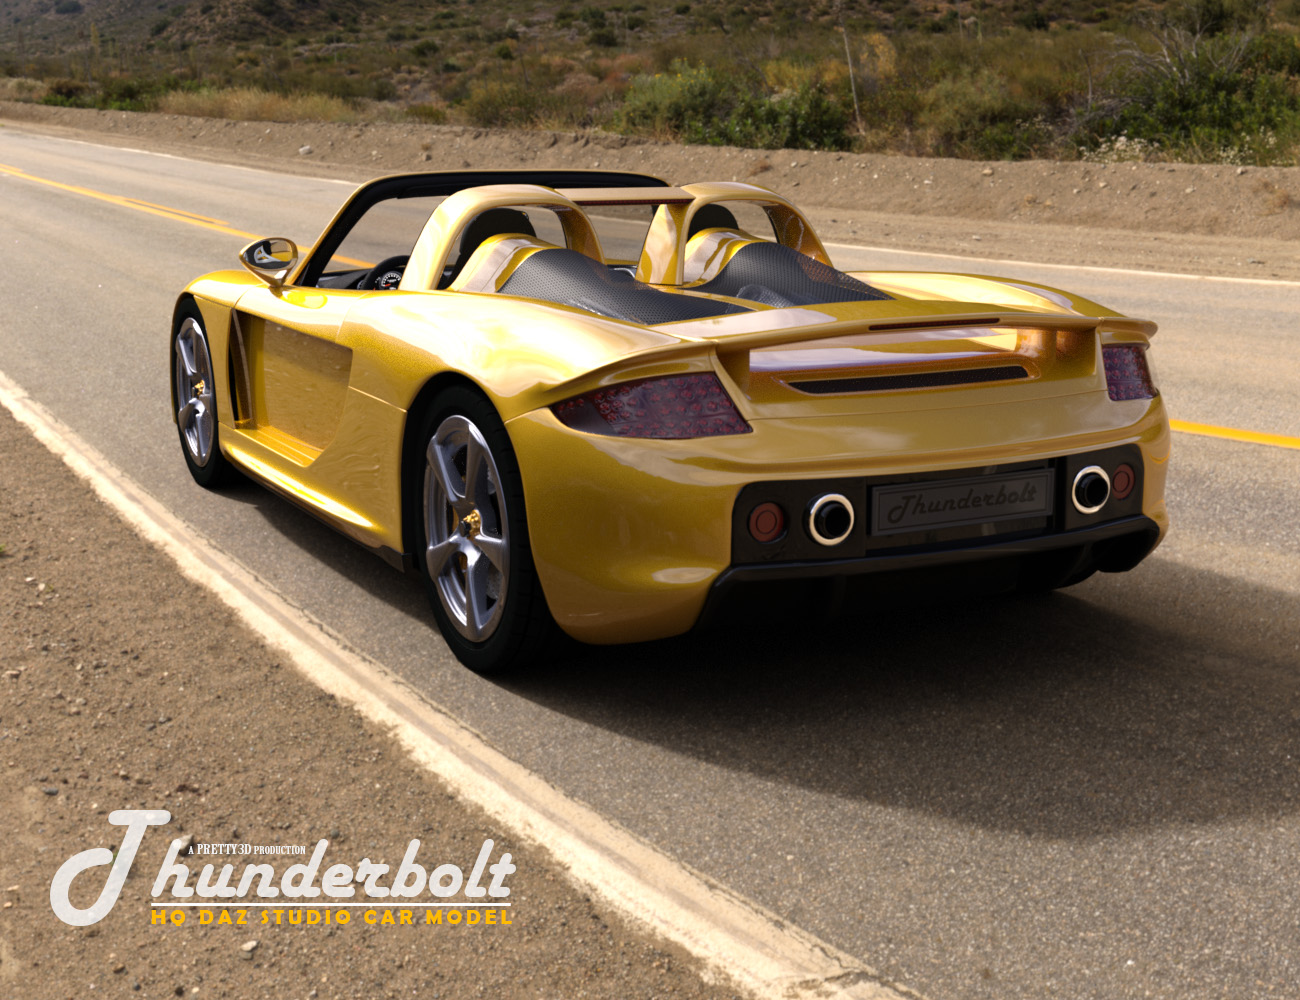 Thunderbolt by: Pretty3D, 3D Models by Daz 3D